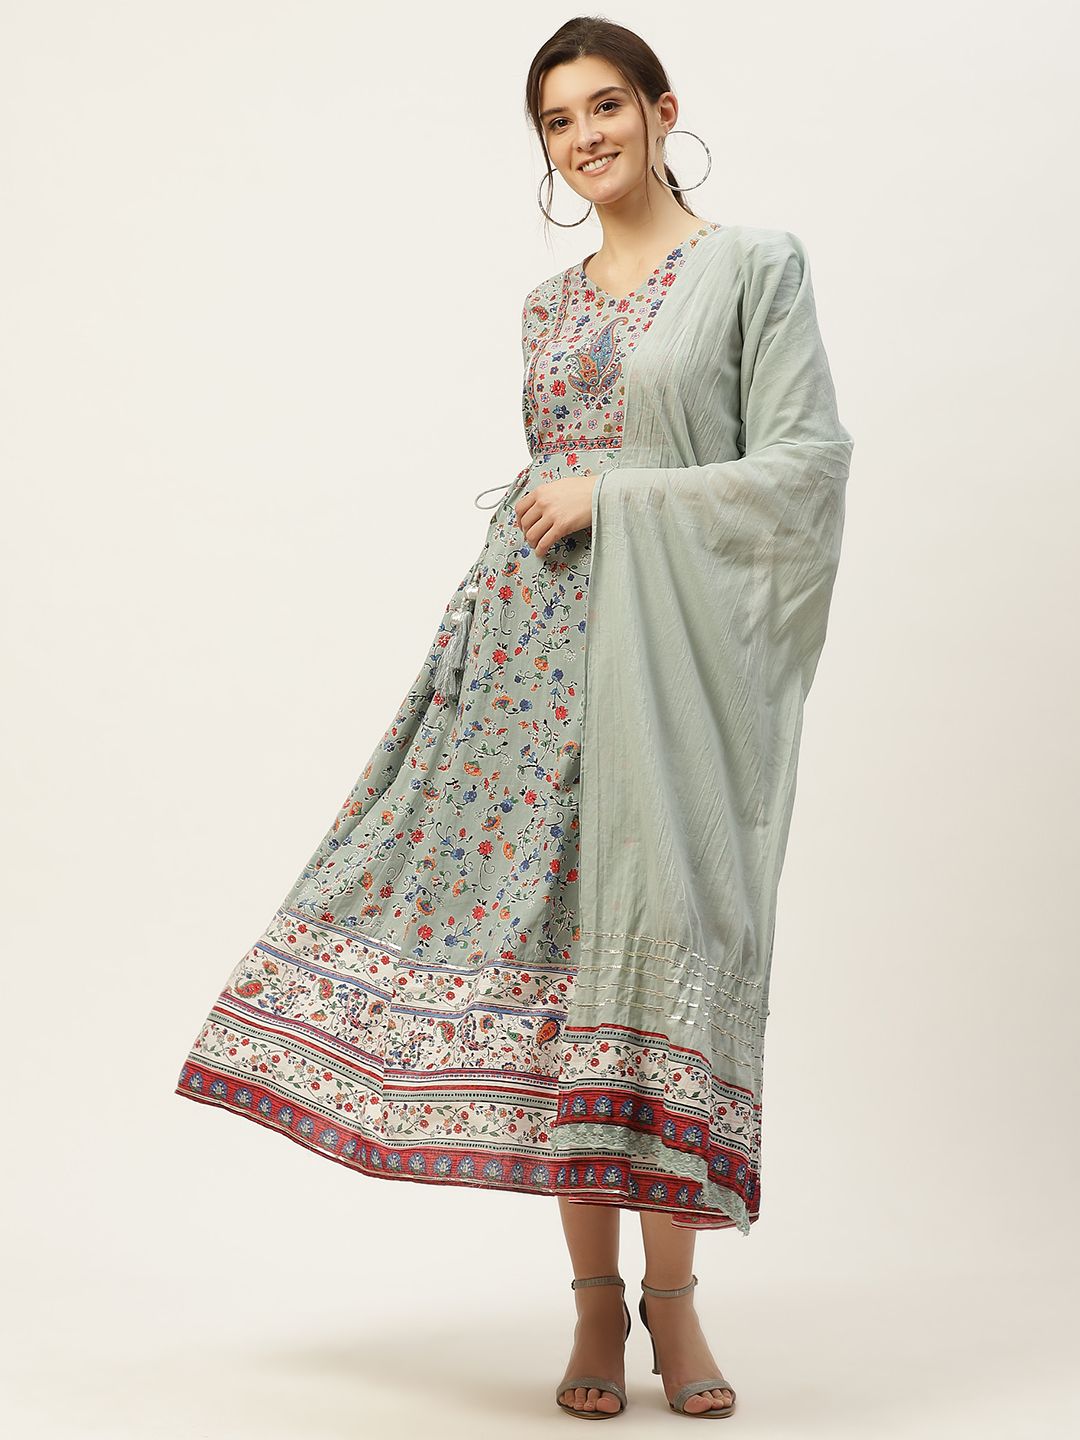 Juniper Grey & Blue Floral Camric Cotton Ethnic A-Line Midi Dress Price in India